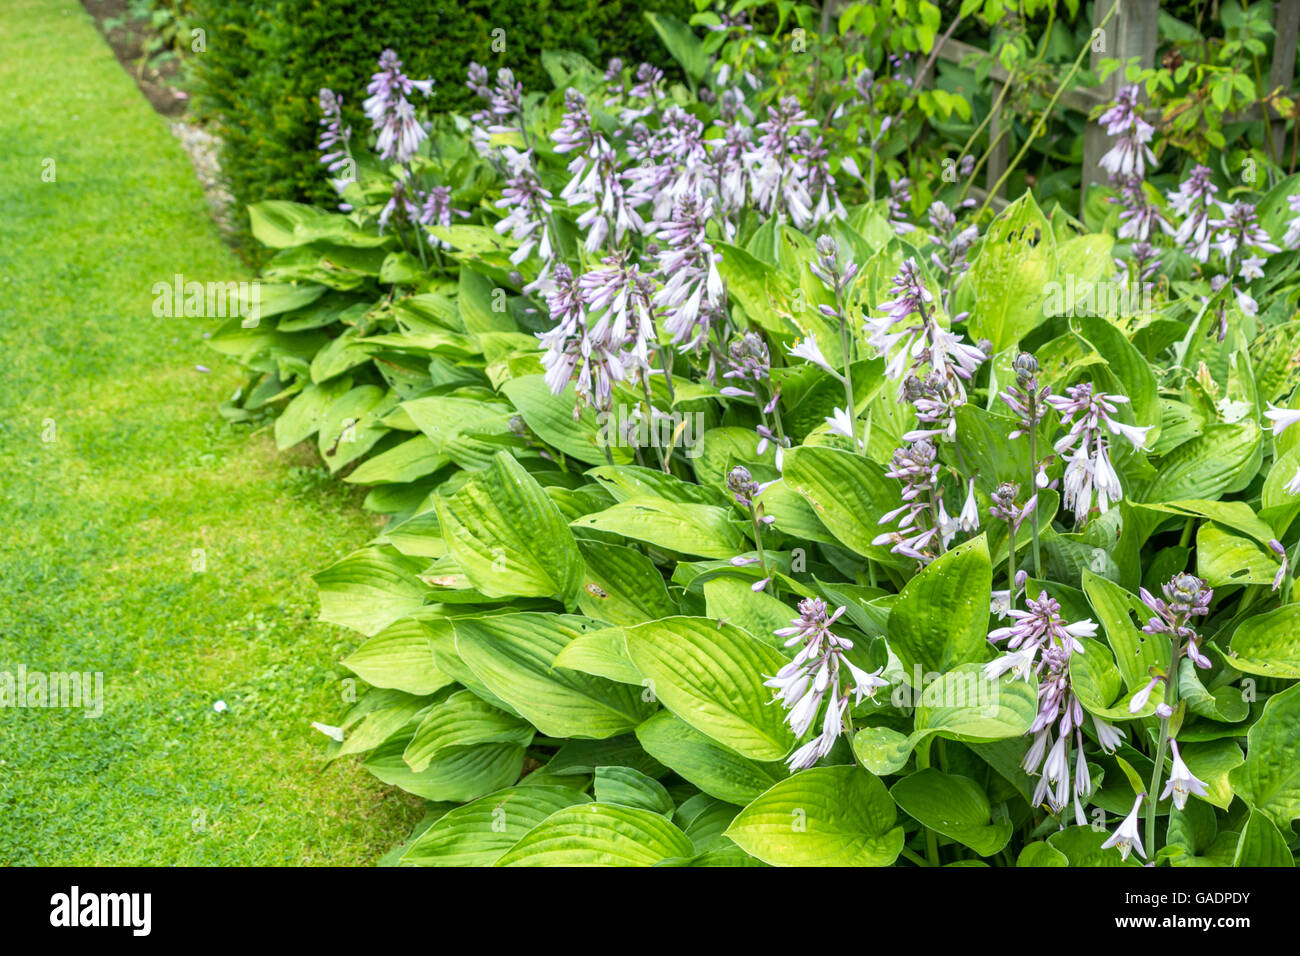 Hosta blossom, Group of flowering plants Stock Photo - Alamy